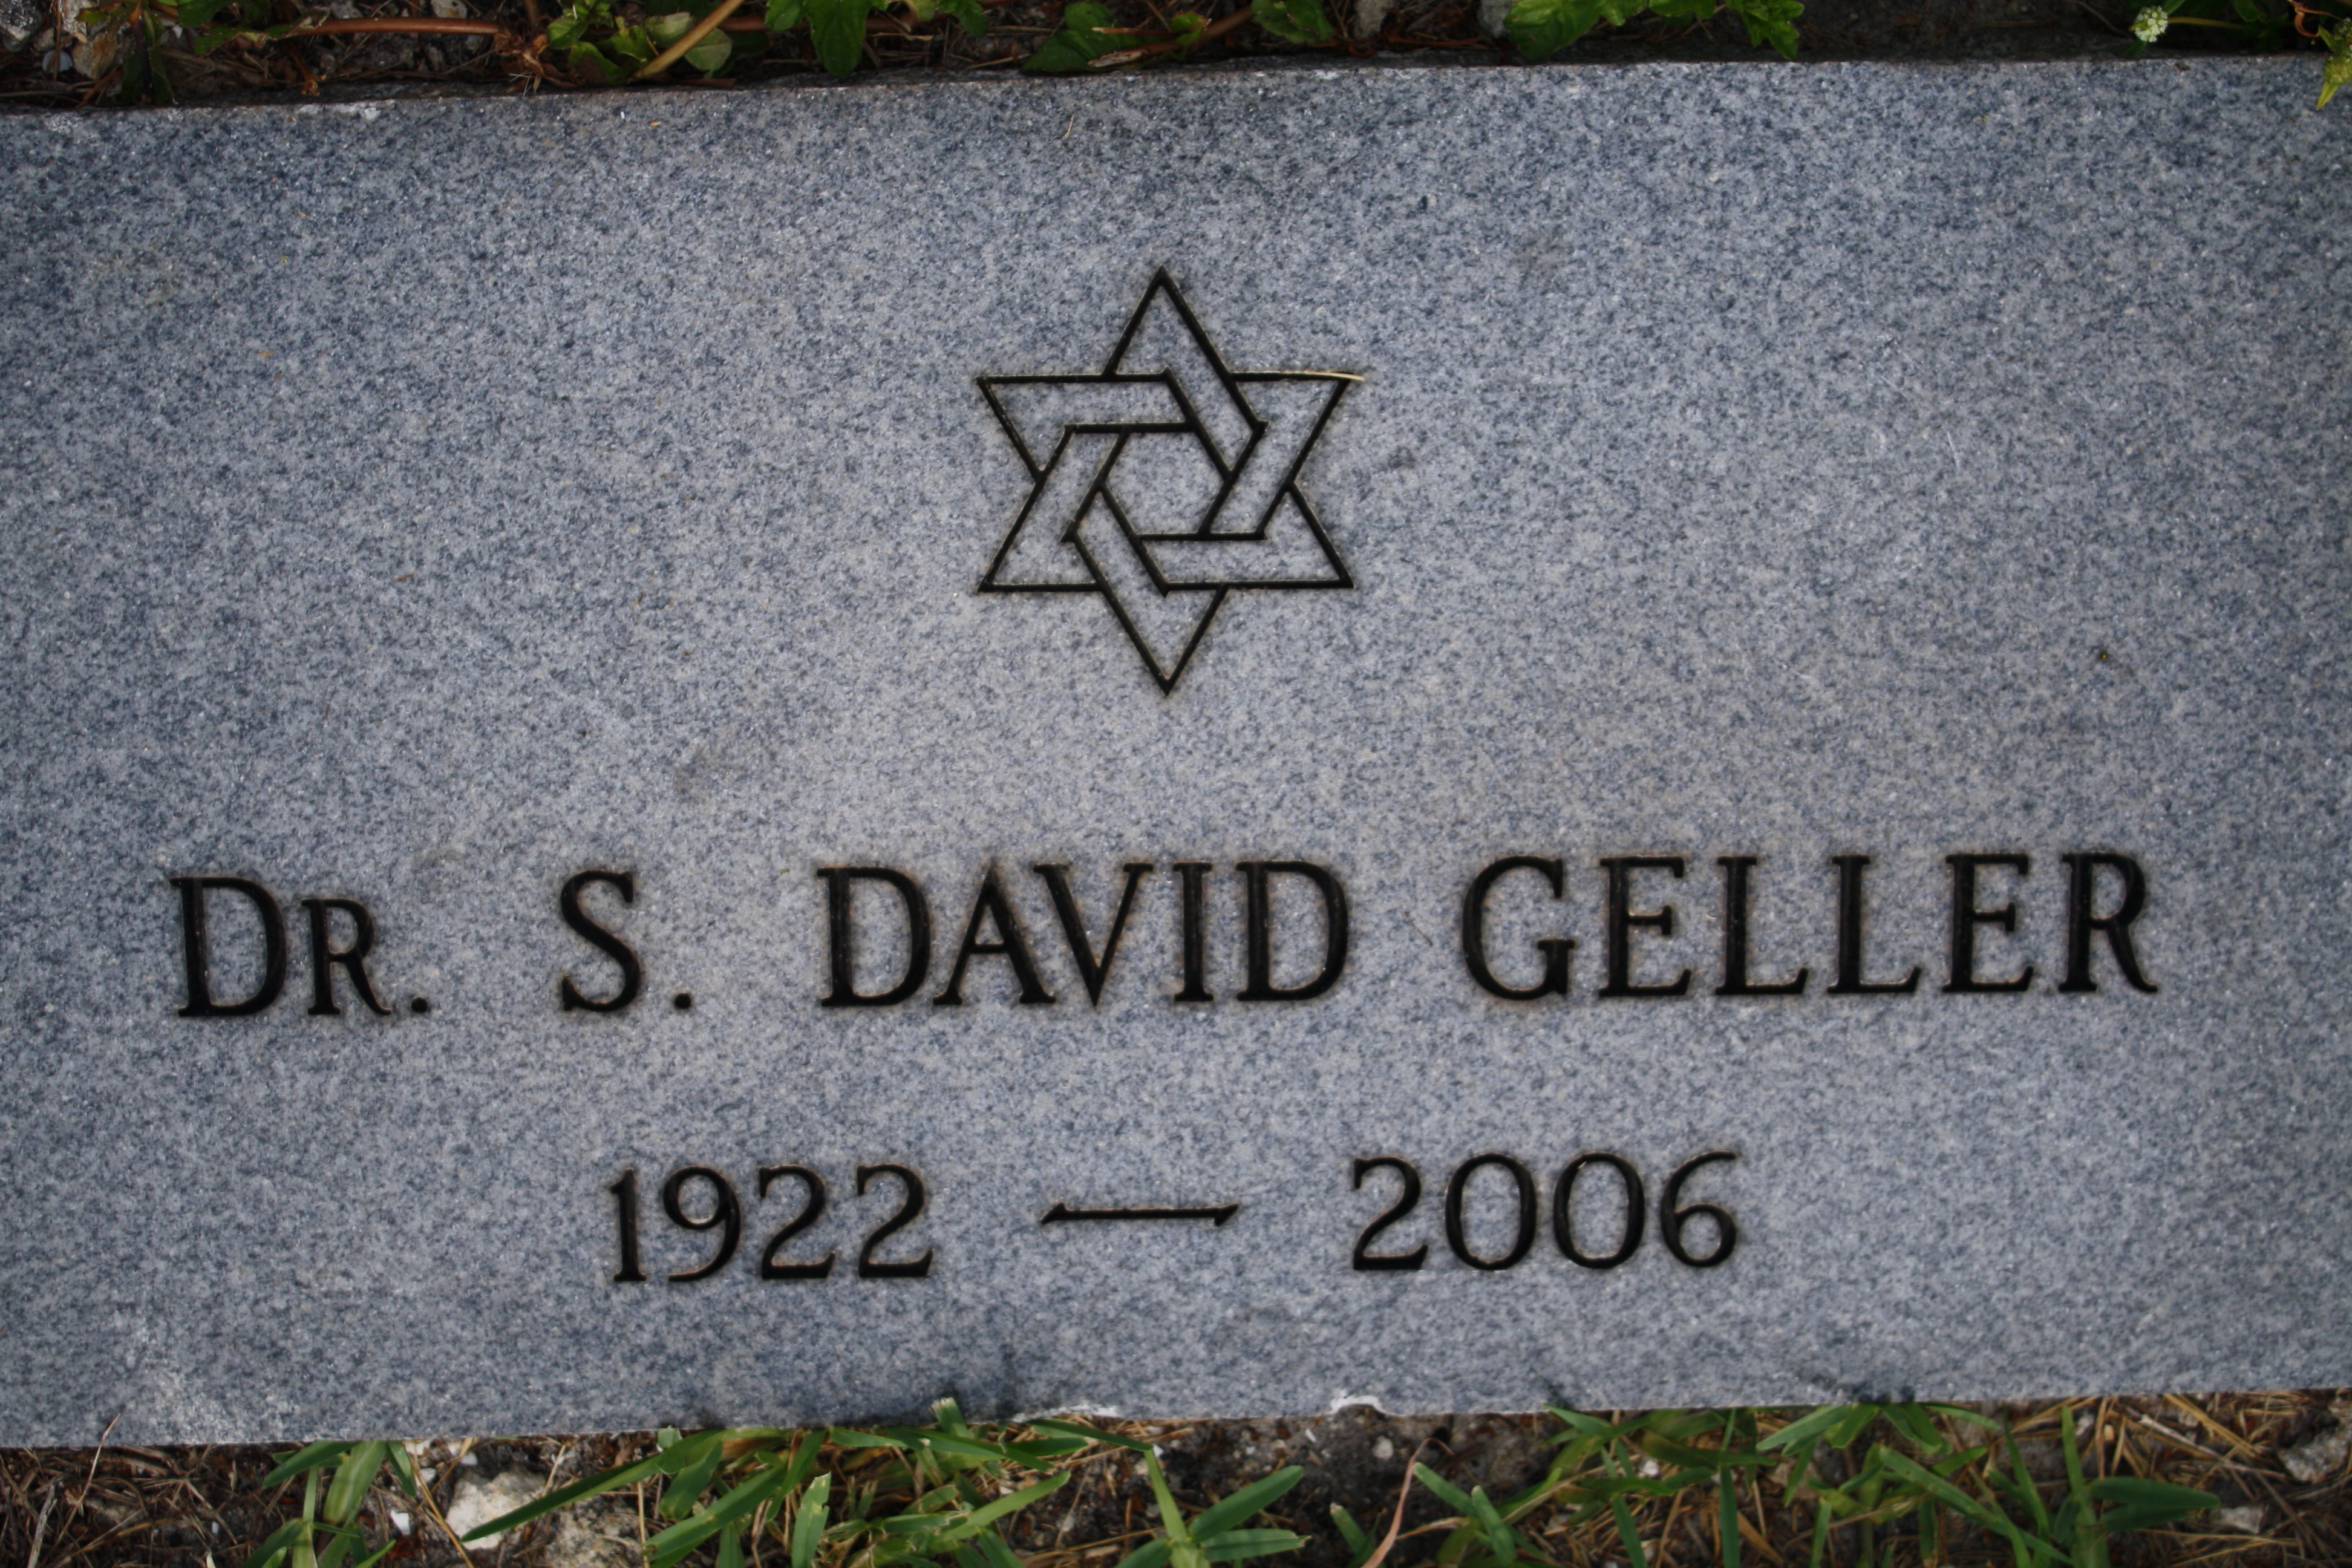 Dr S David Geller